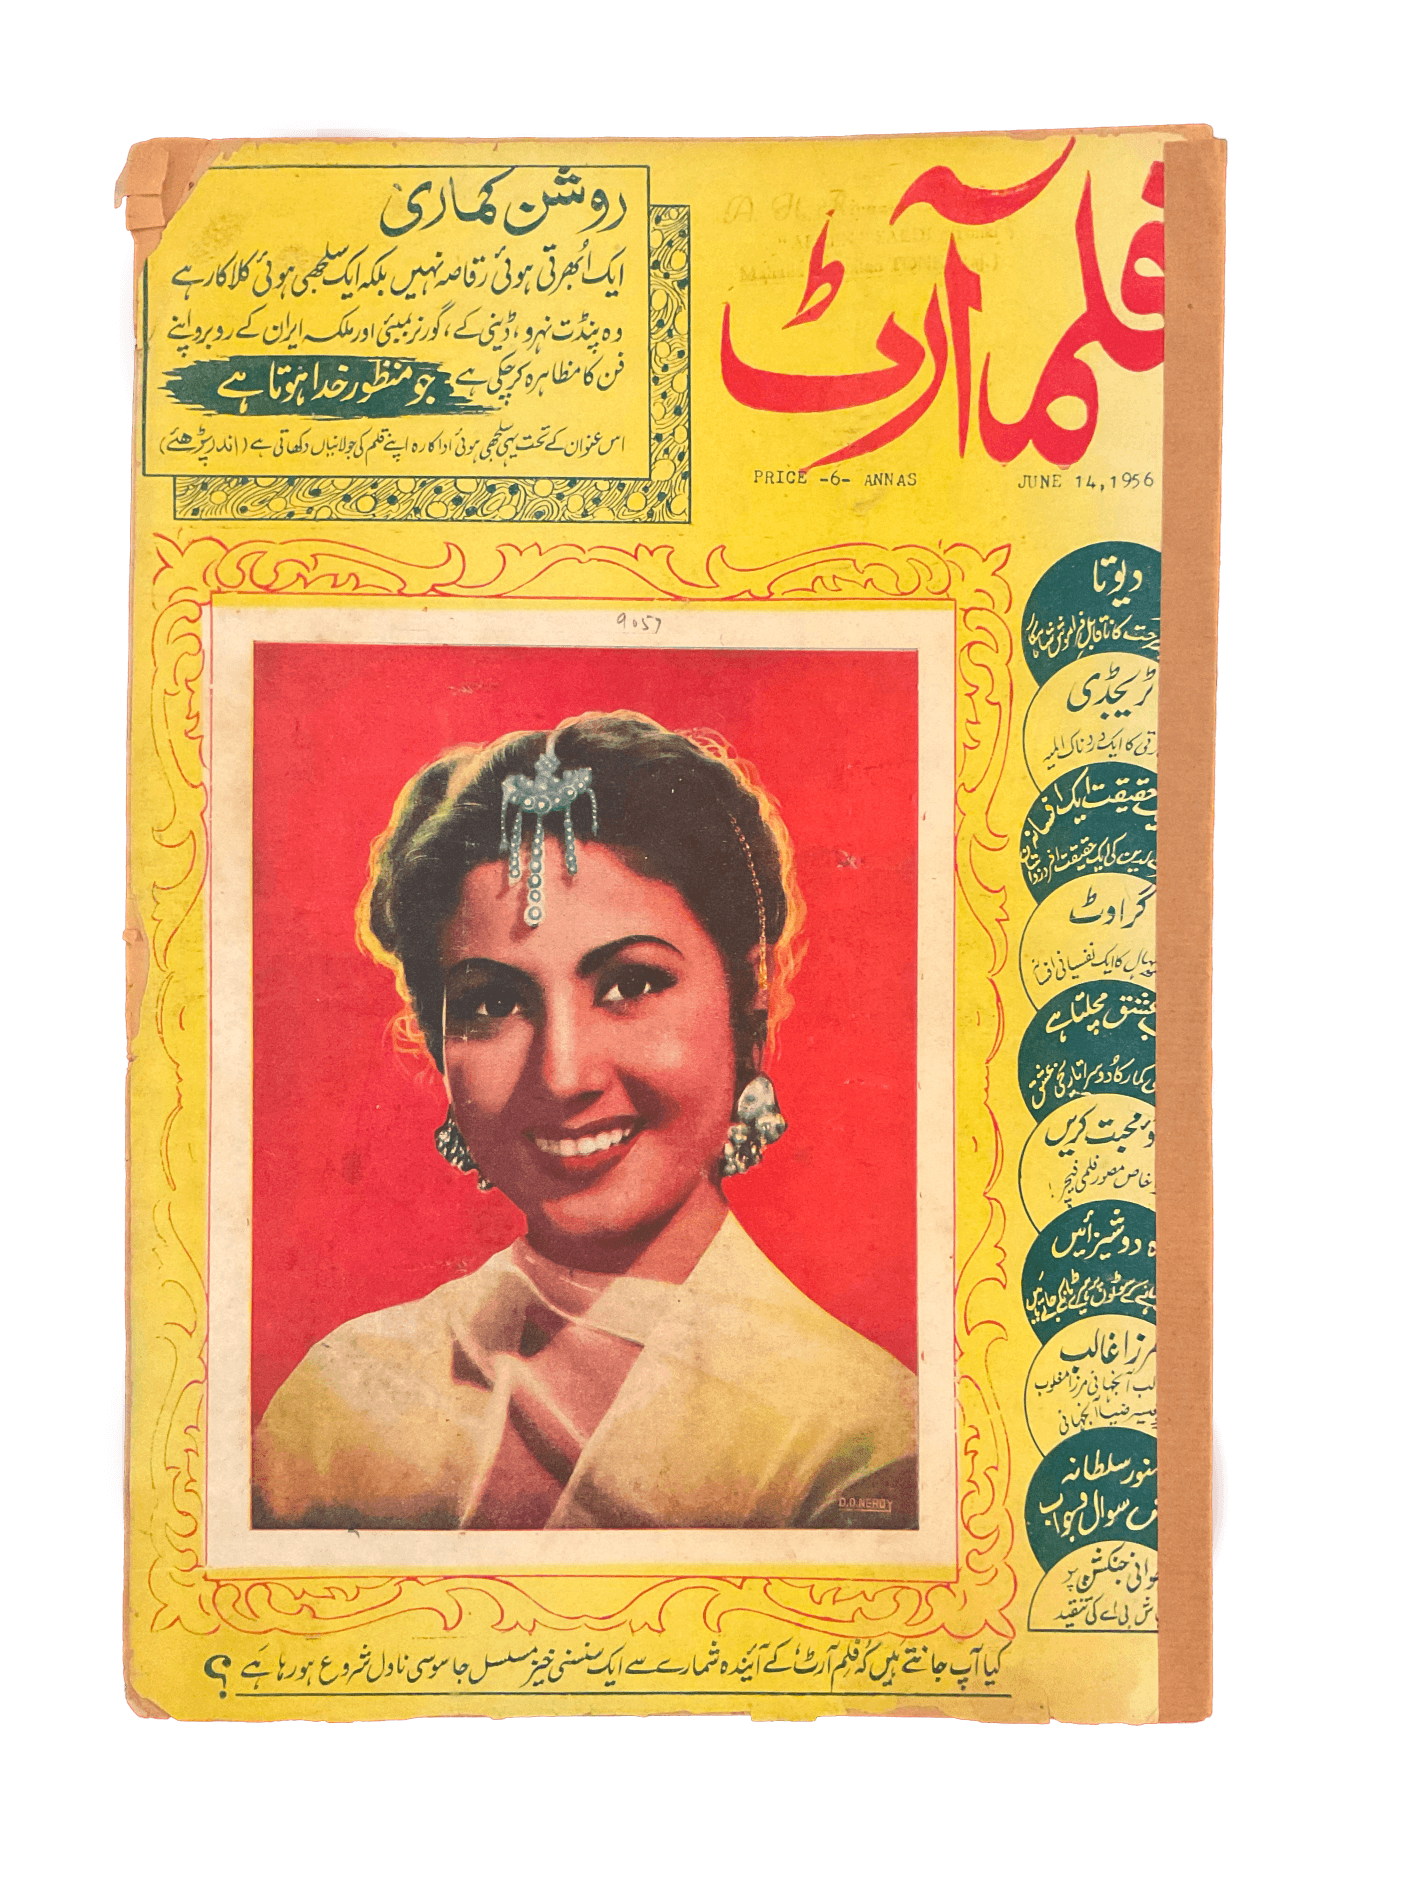 1950s-60s Film Art | 80 Issues - KHAJISTAN™